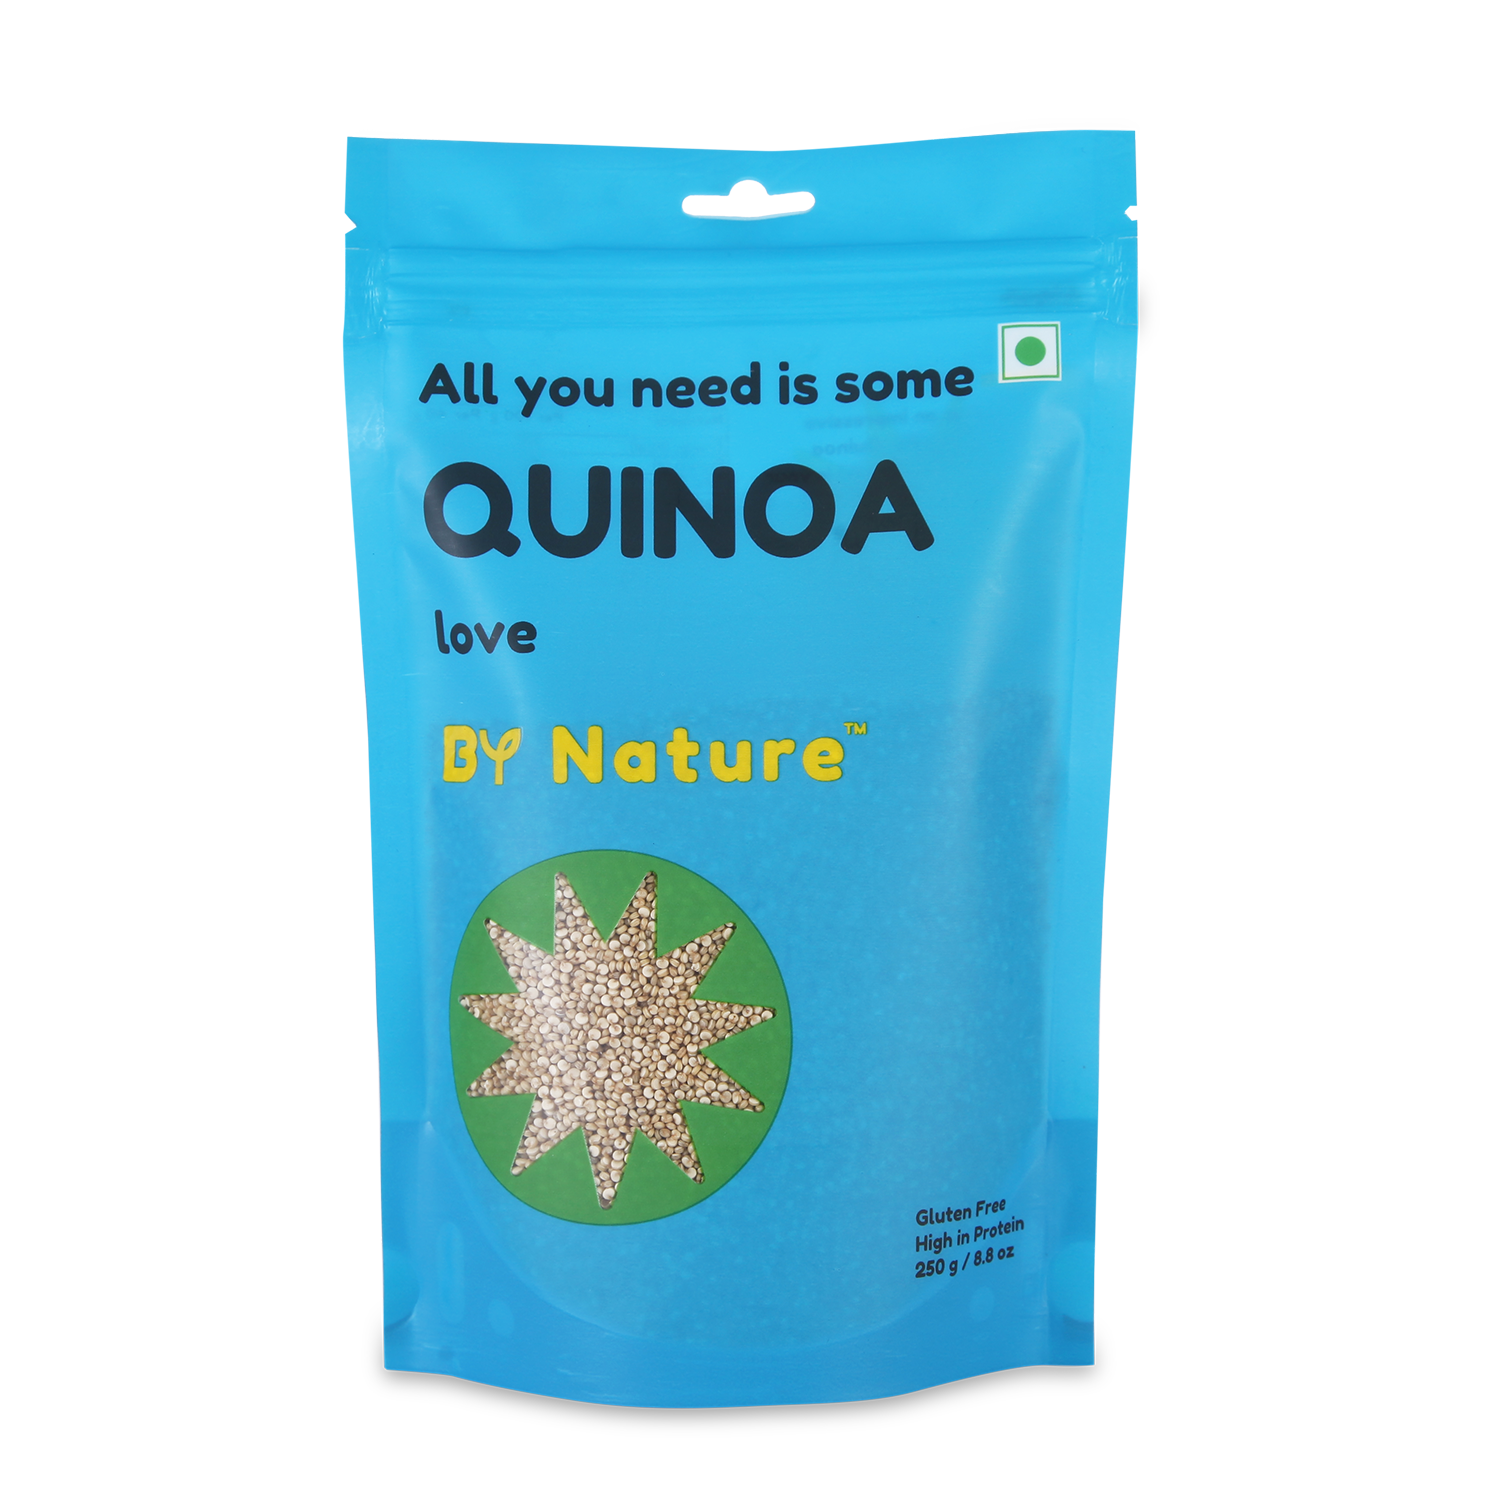 By Nature Quinoa, 250g